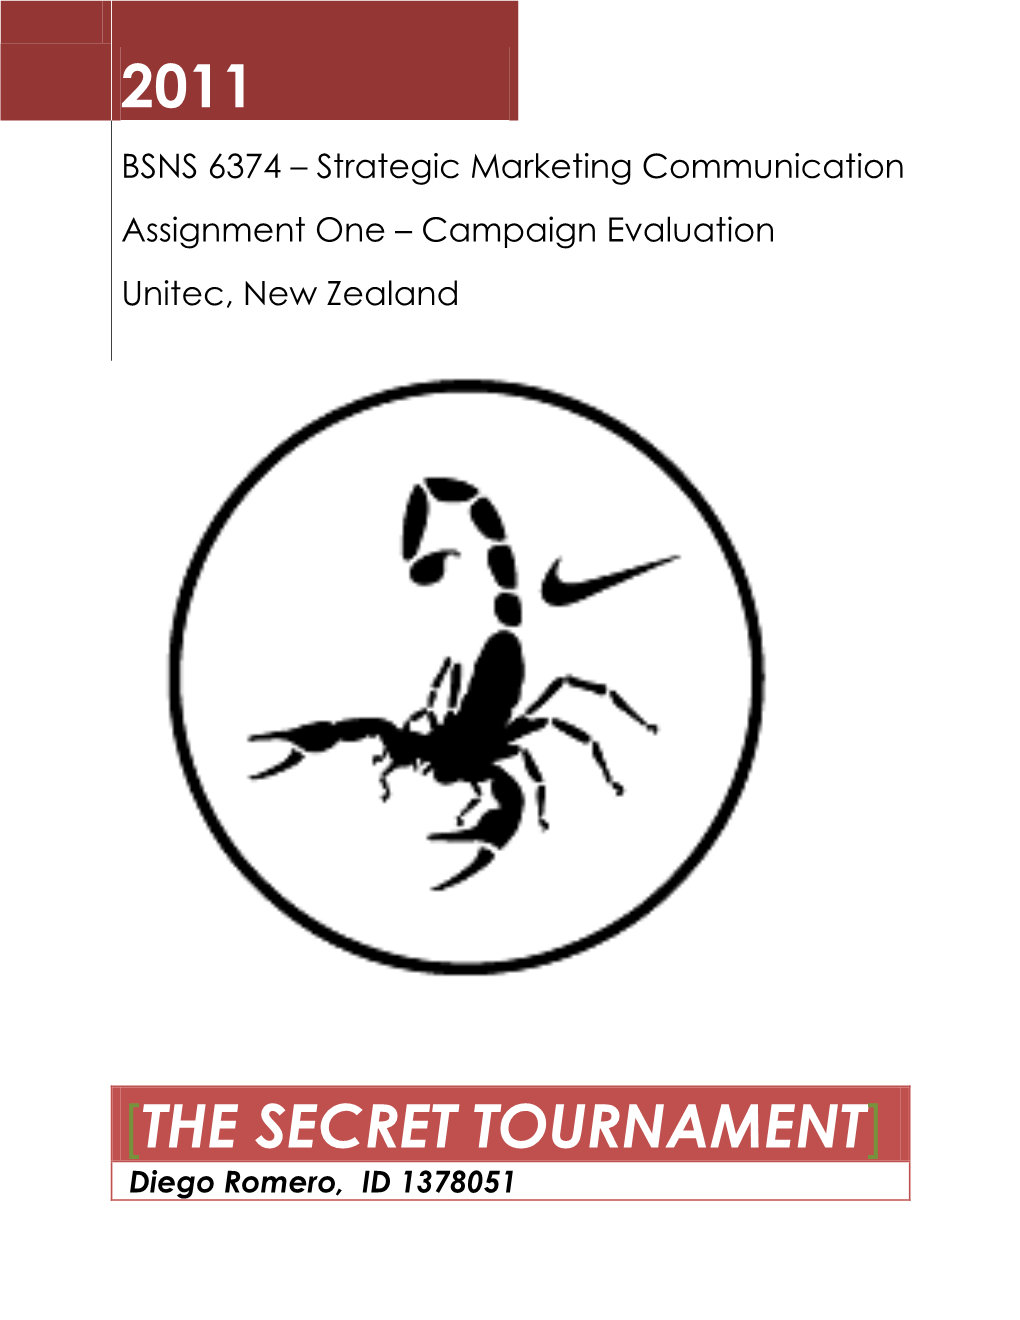 THE SECRET TOURNAMENT] Diego Romero, ID 1378051 BSNS 6374 Strategic Marketing Communications Assignment 1 | Campaign Evaluation